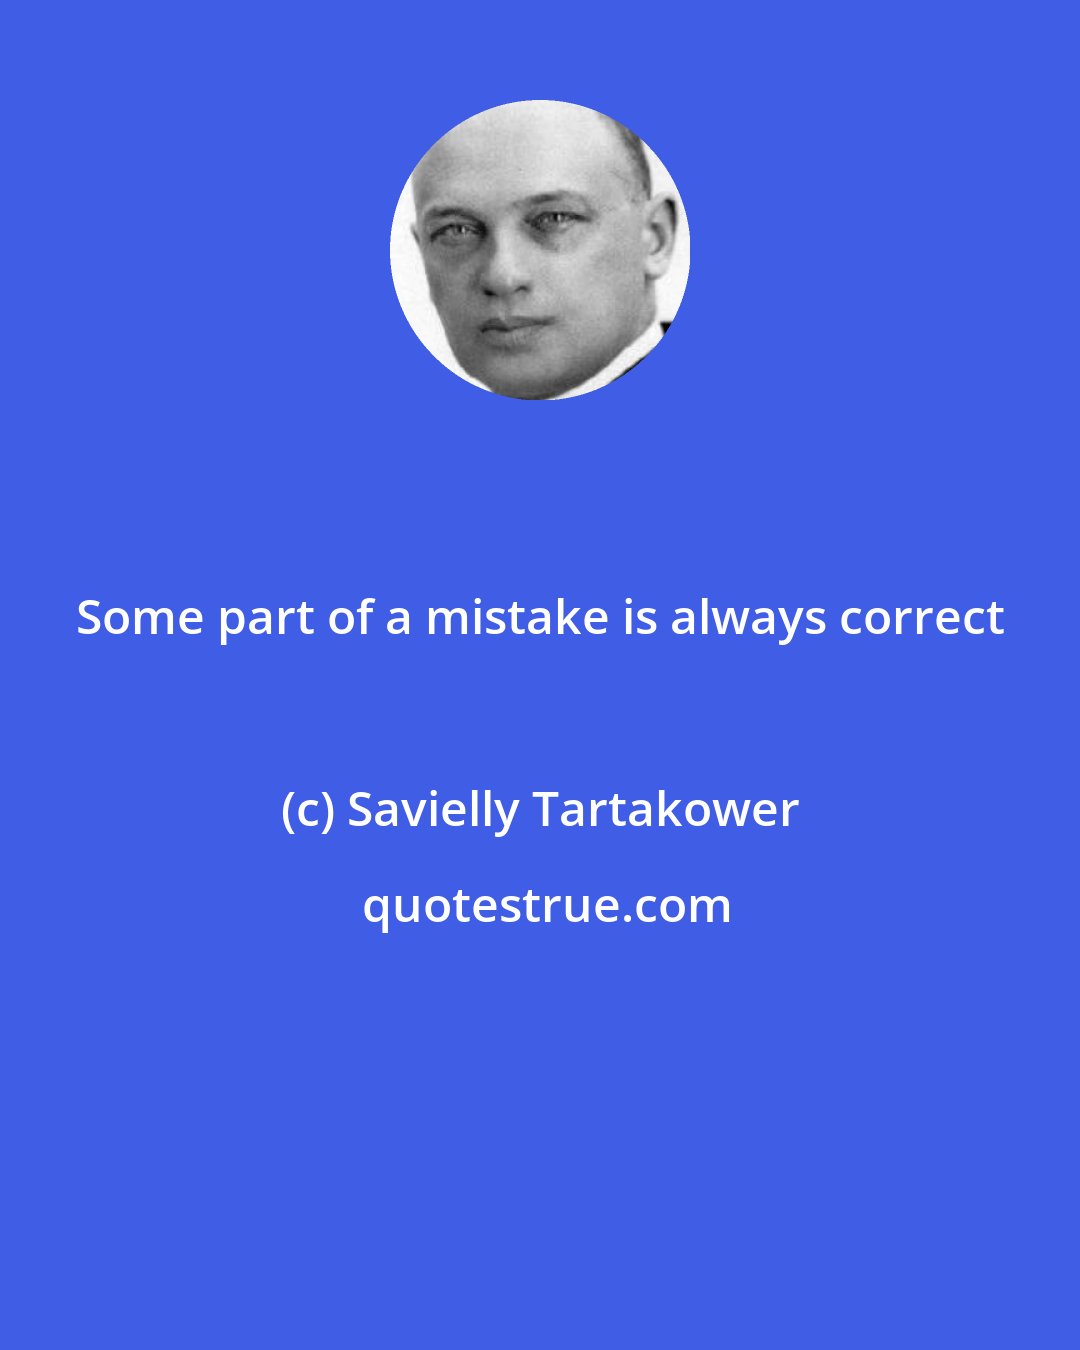 Savielly Tartakower: Some part of a mistake is always correct